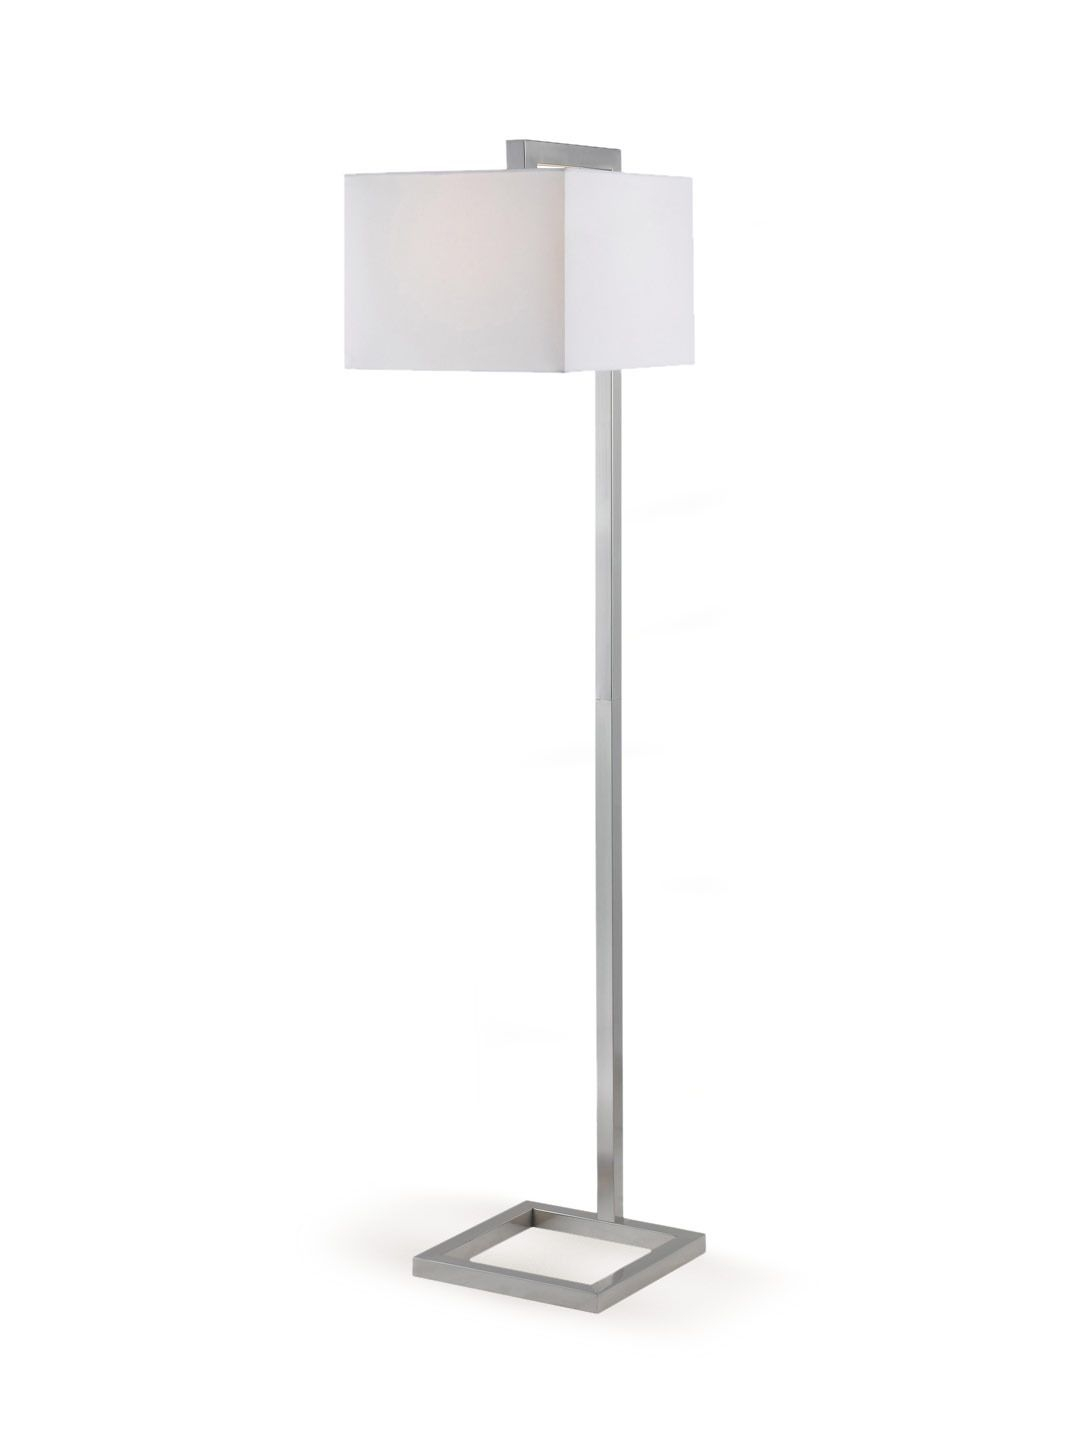 Design Craft Cronus Floor Lamp Decorating Inspiration pertaining to size 1080 X 1440